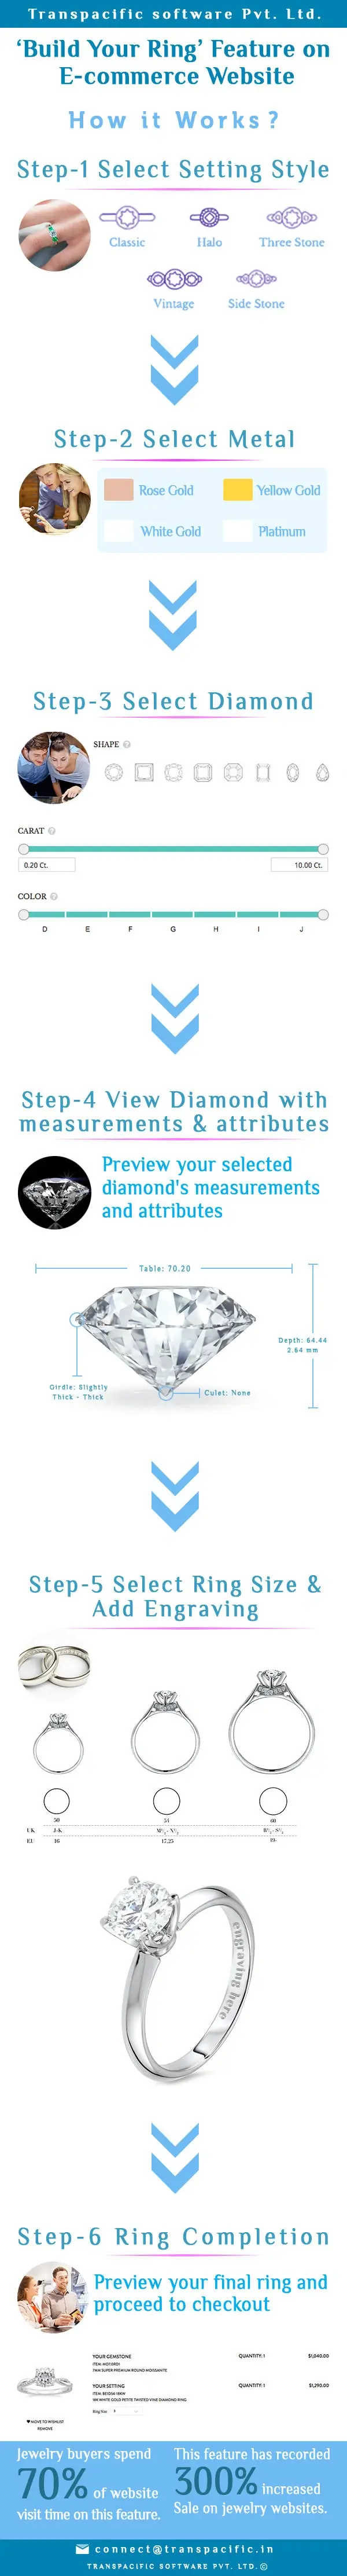 Sample Diamond Details 1